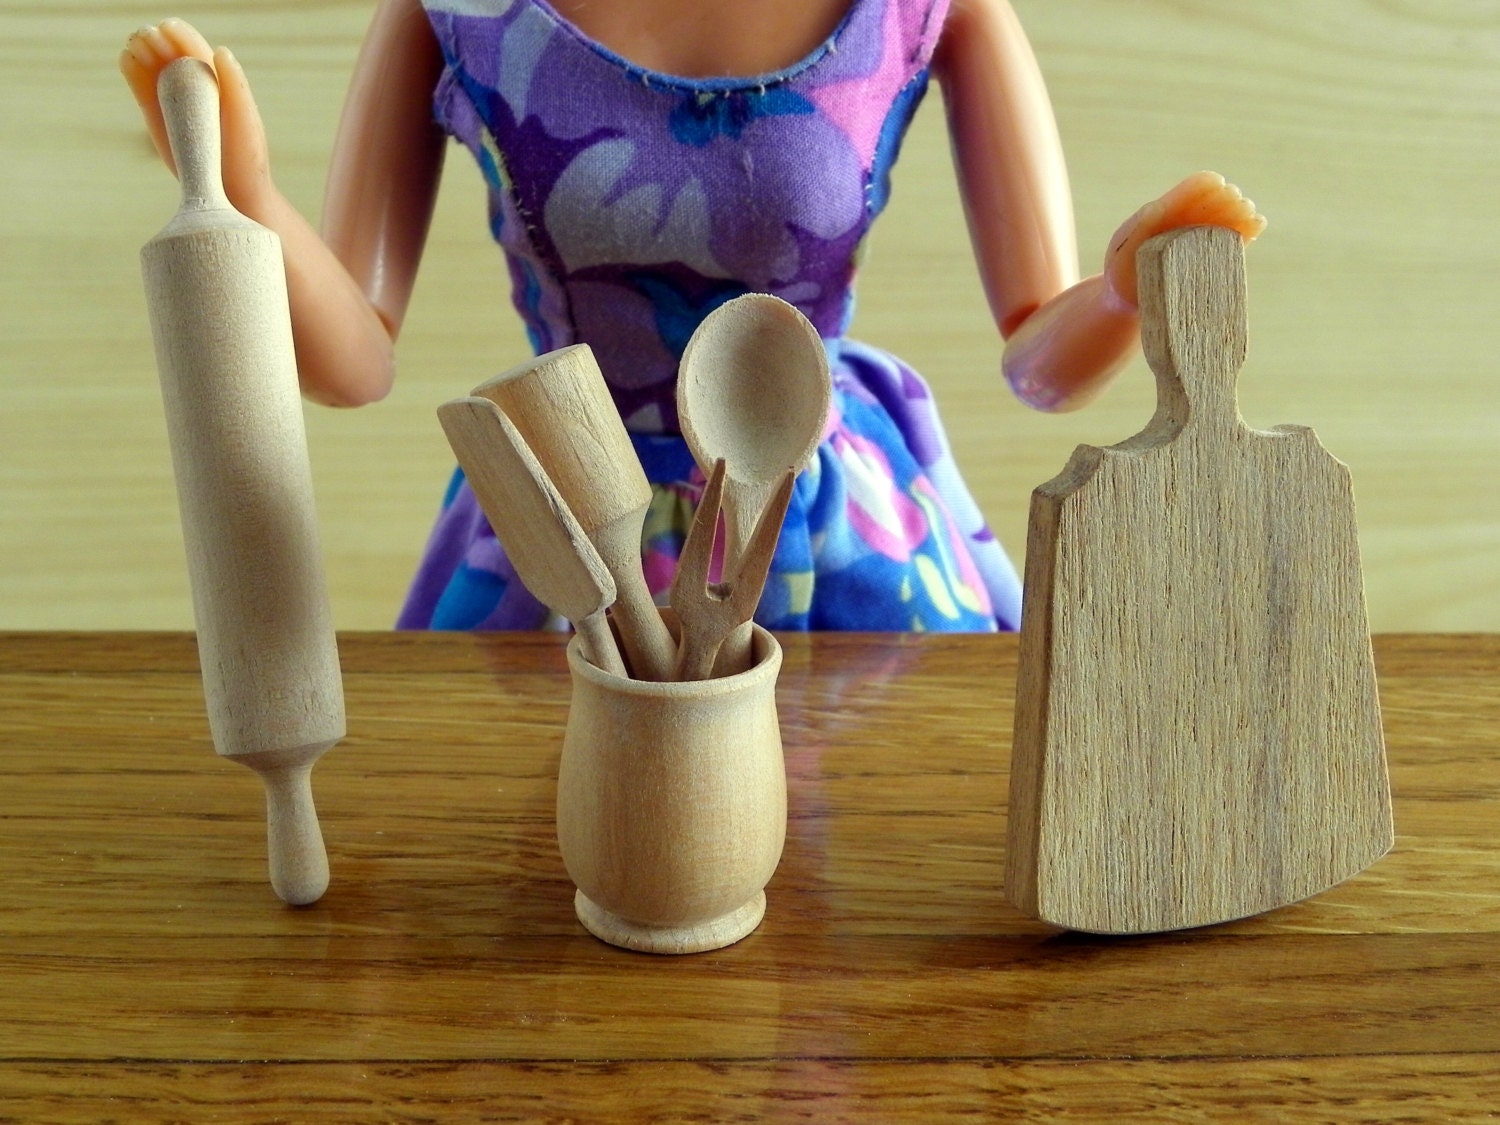 Lot of Barbie  Doll Kitchen  Accessories Wooden utensils in